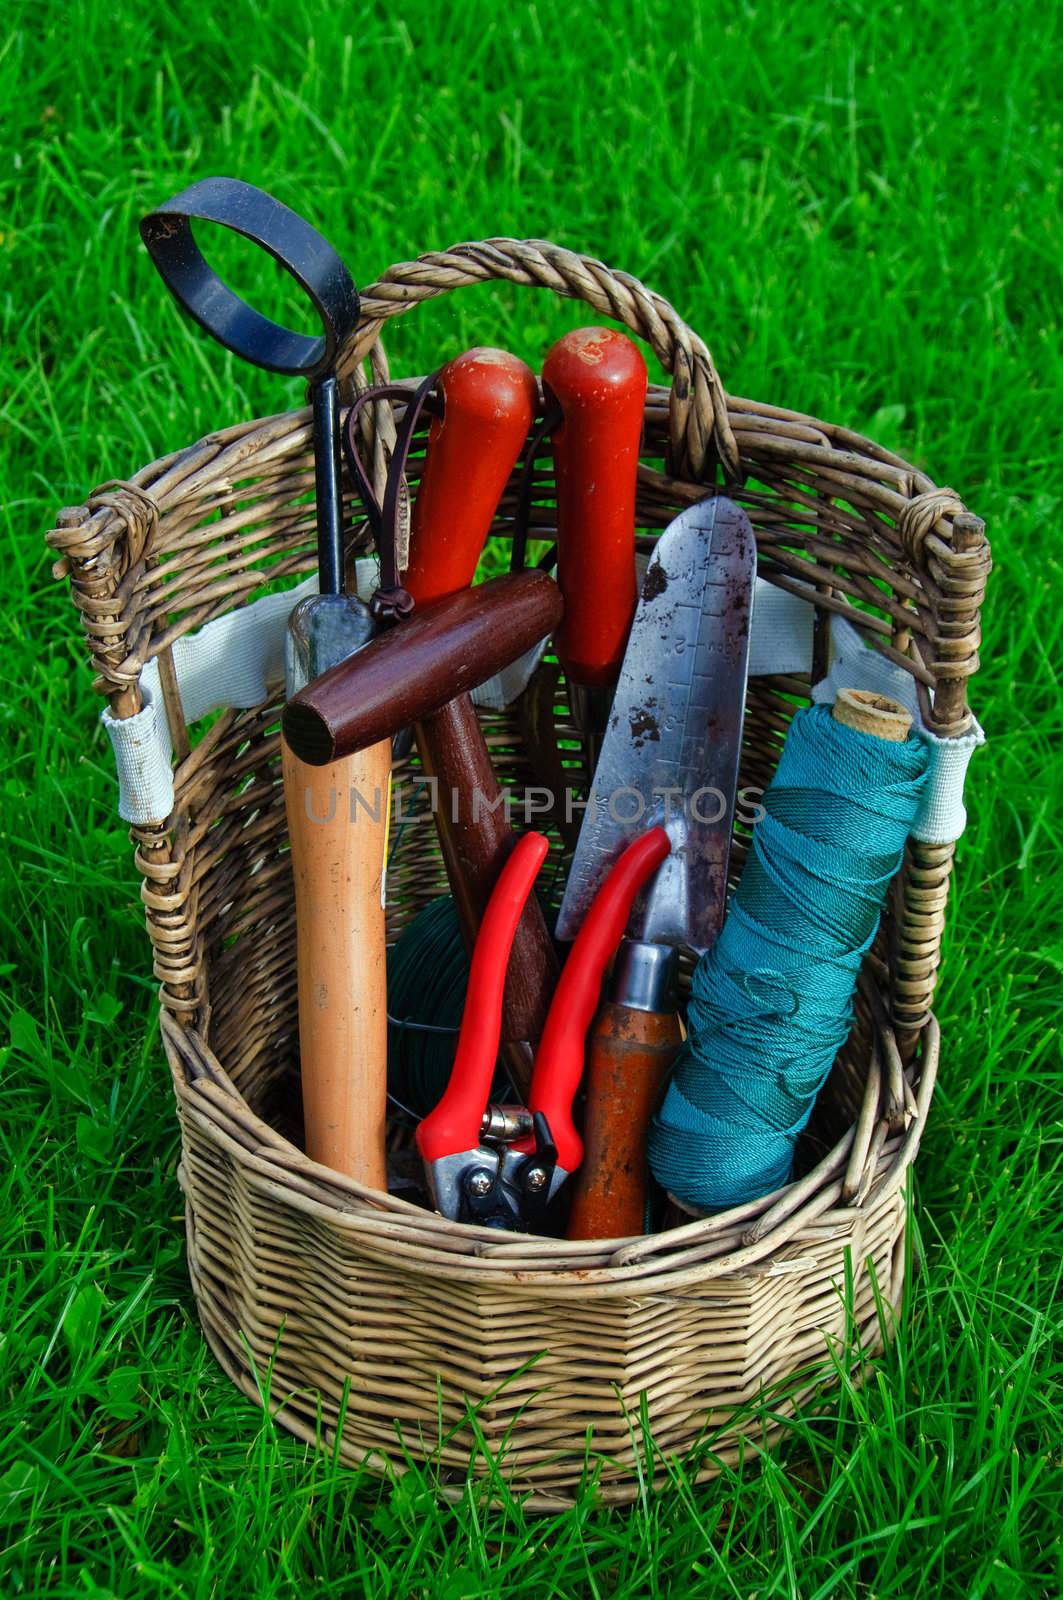 Garden tools by GryT